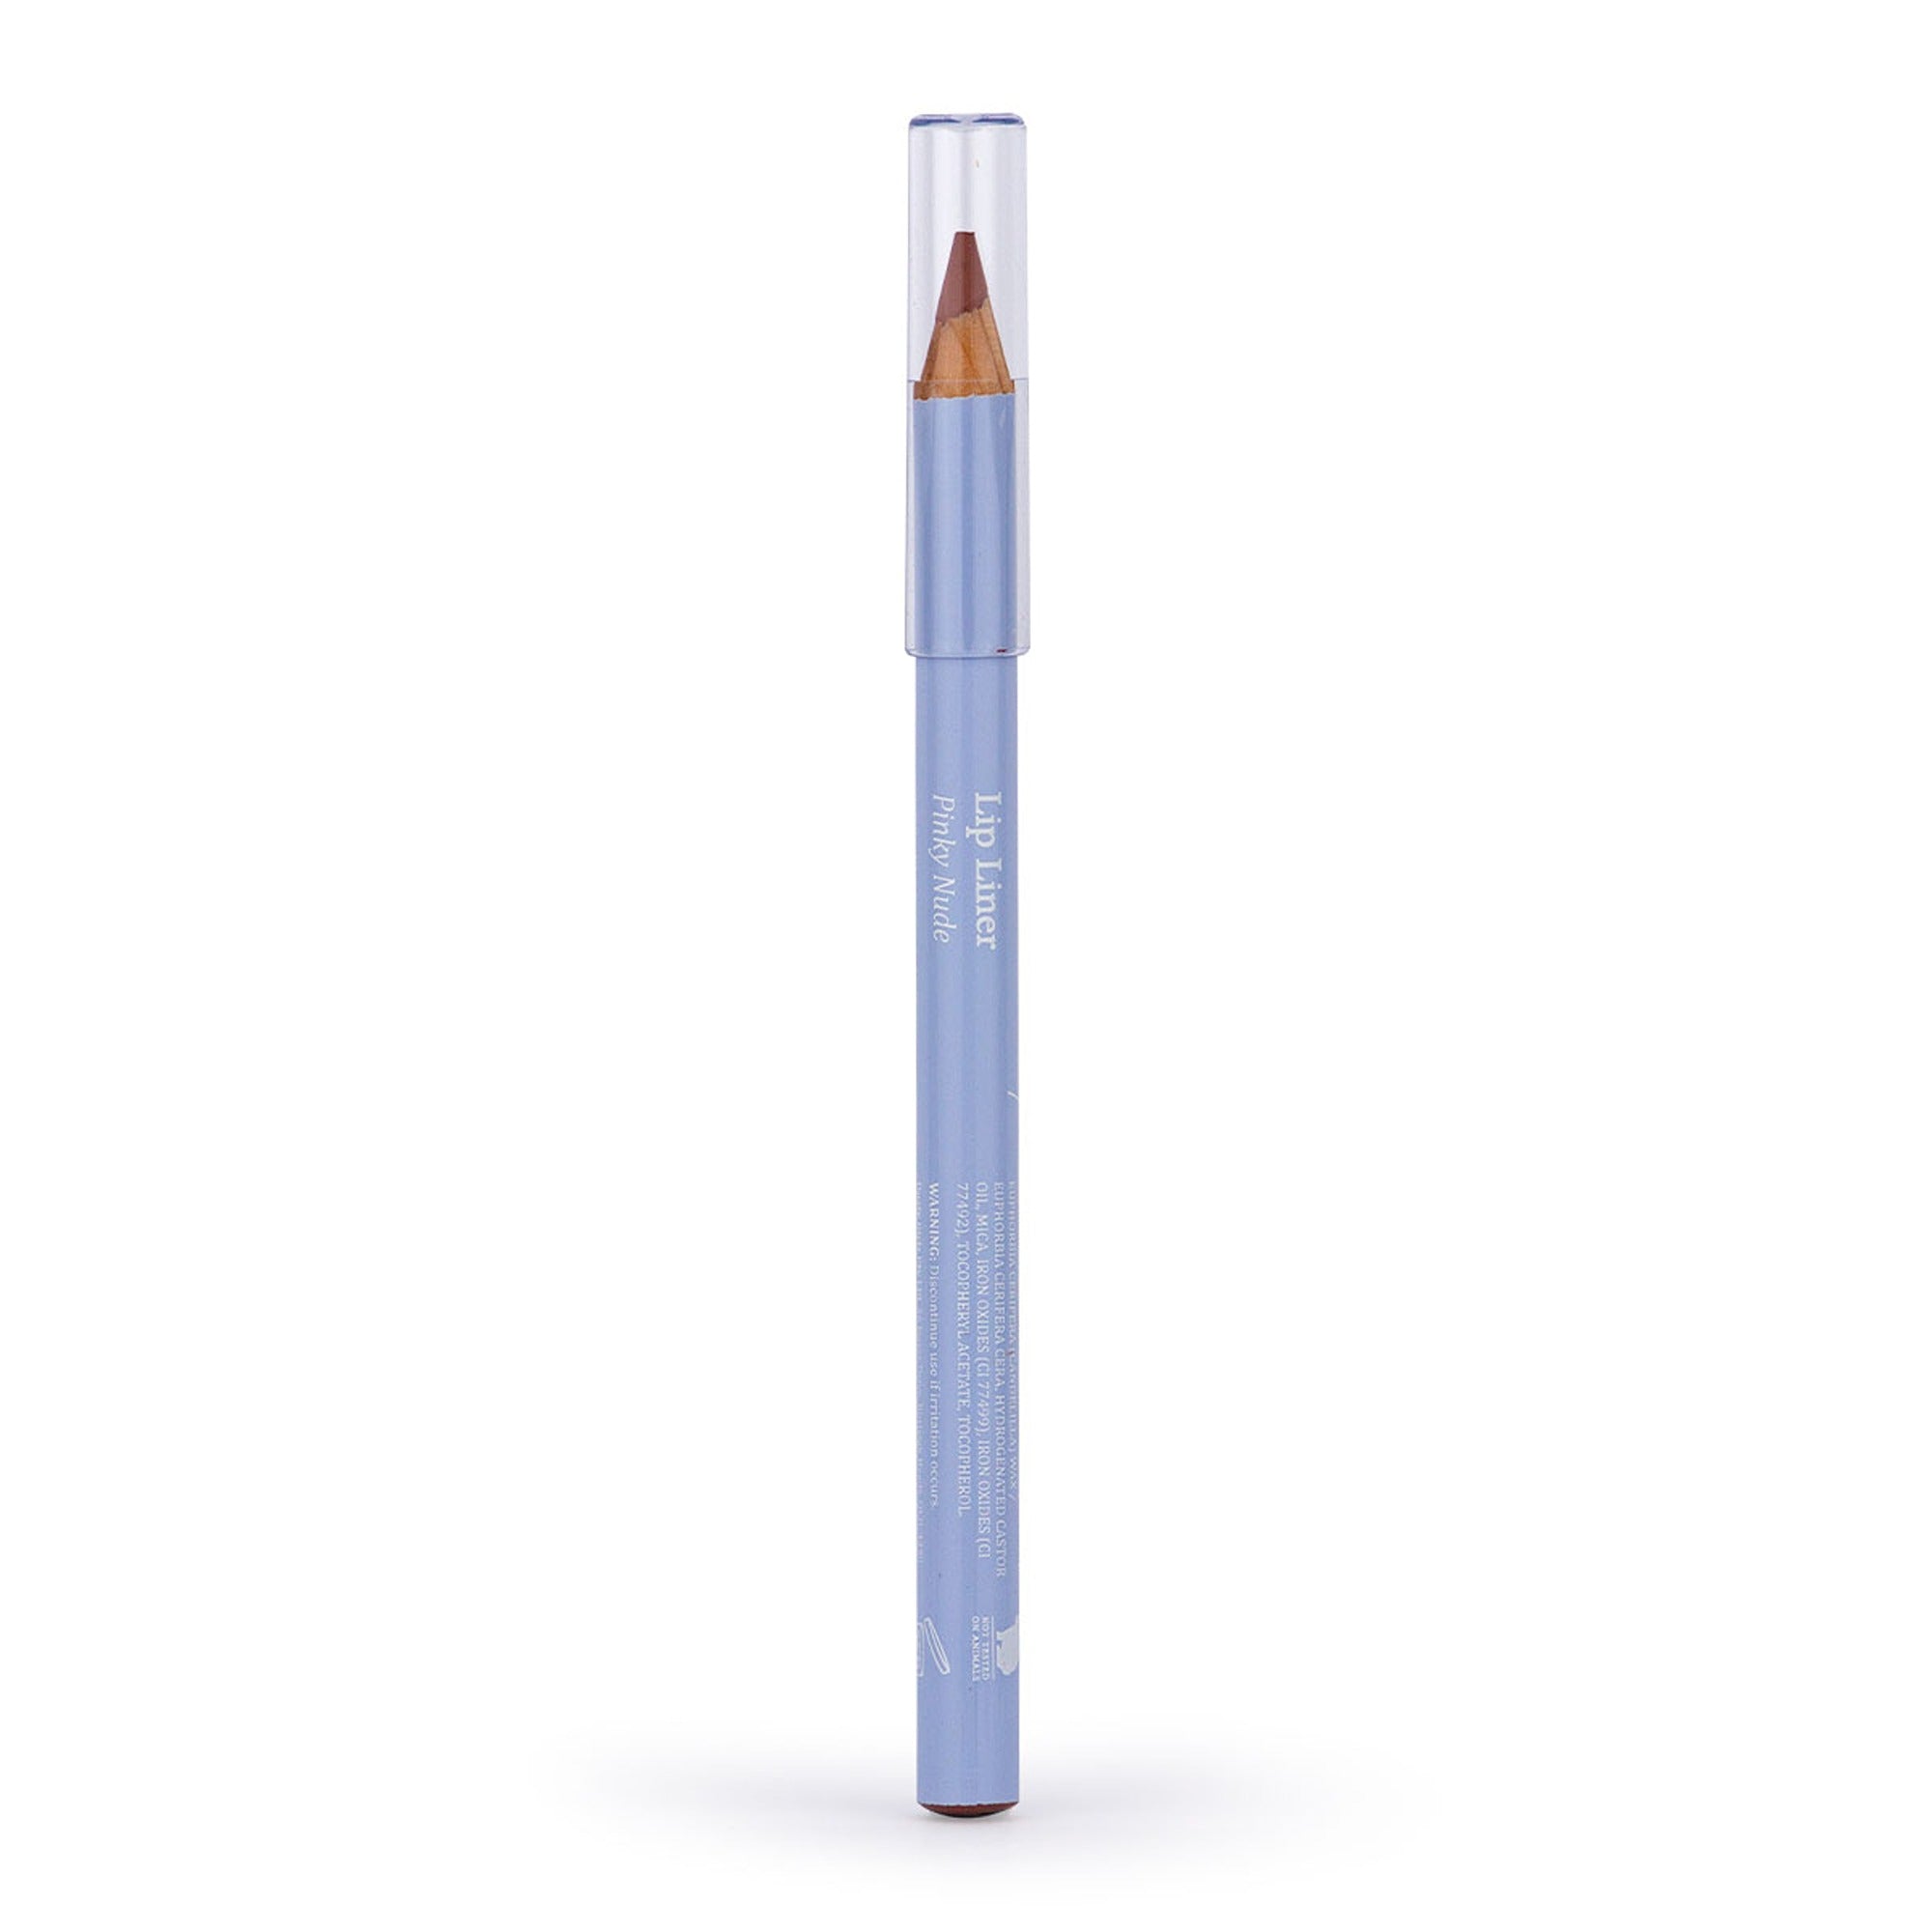 Moogoo Vegan Lip Liner Pencil 2g - Pinky Nude